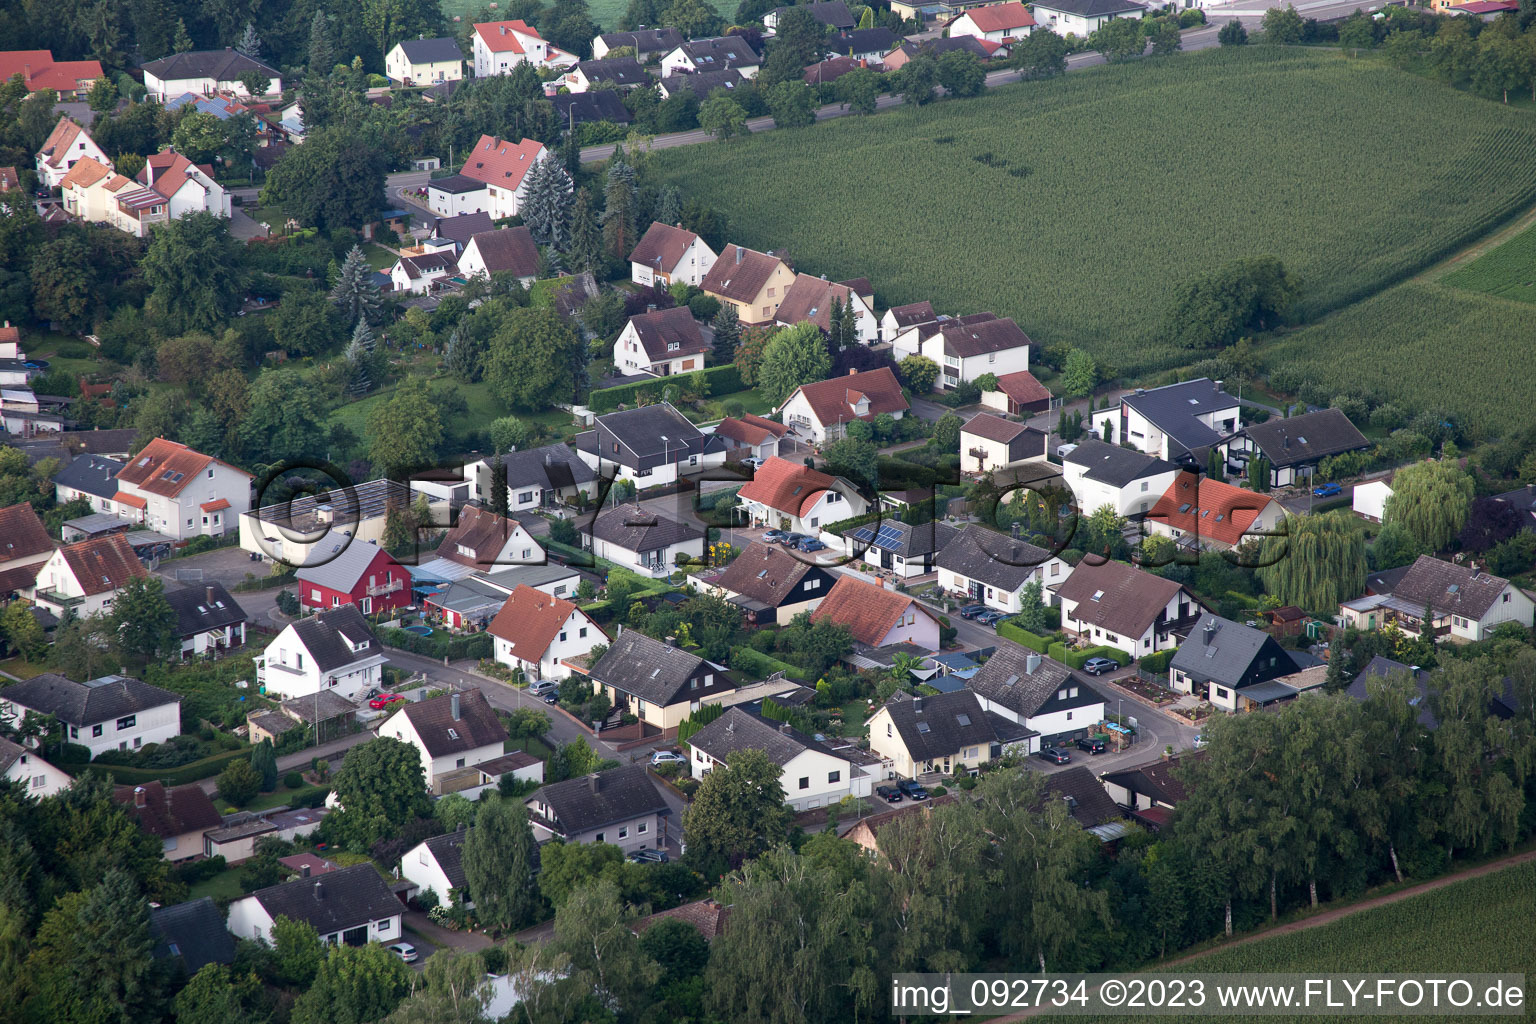 Maxburgstr in the district Billigheim in Billigheim-Ingenheim in the state Rhineland-Palatinate, Germany from above